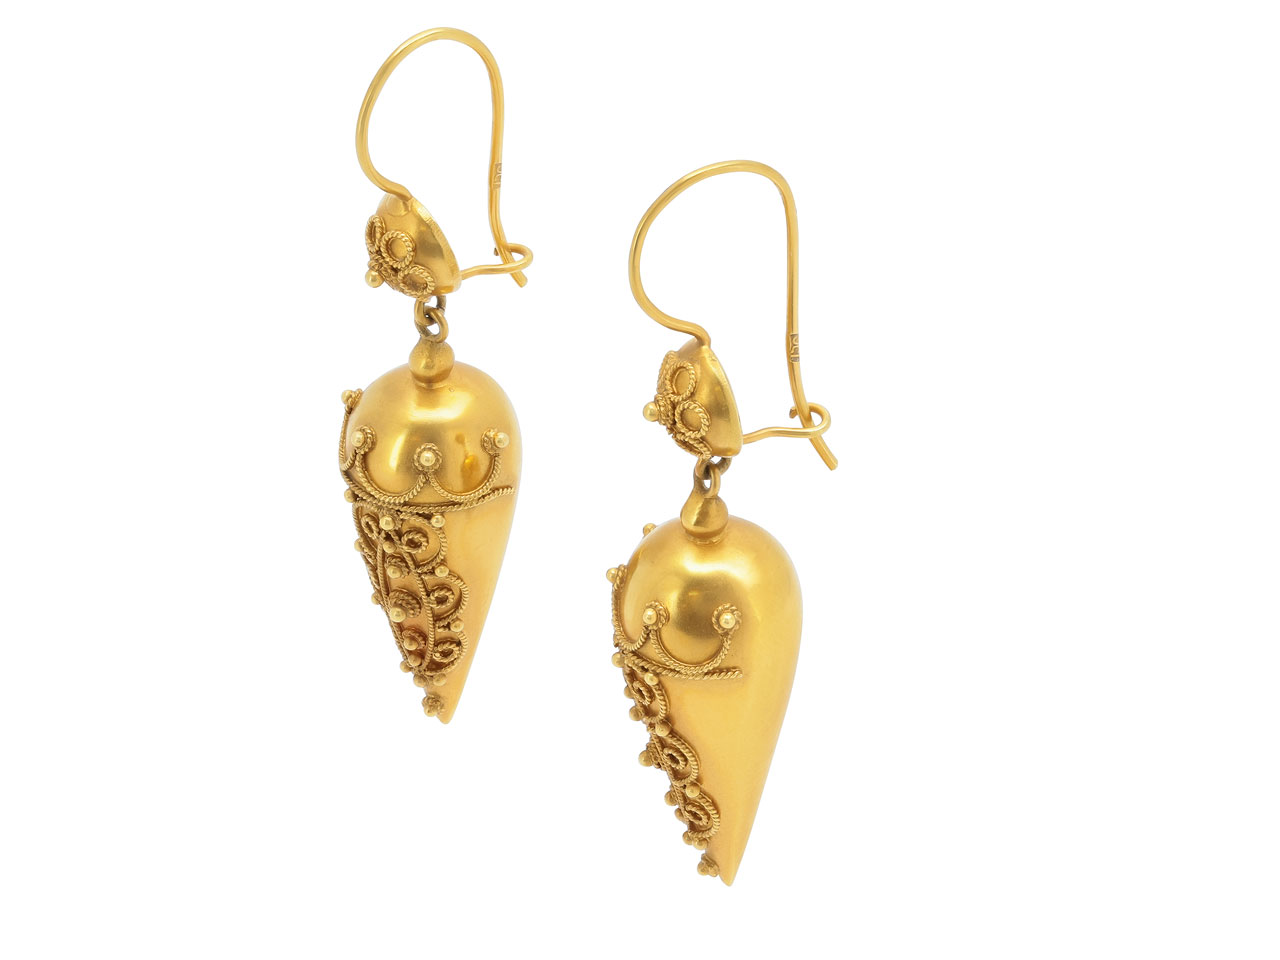 Antique Victorian Etruscan Revival Earrings in 22K Gold